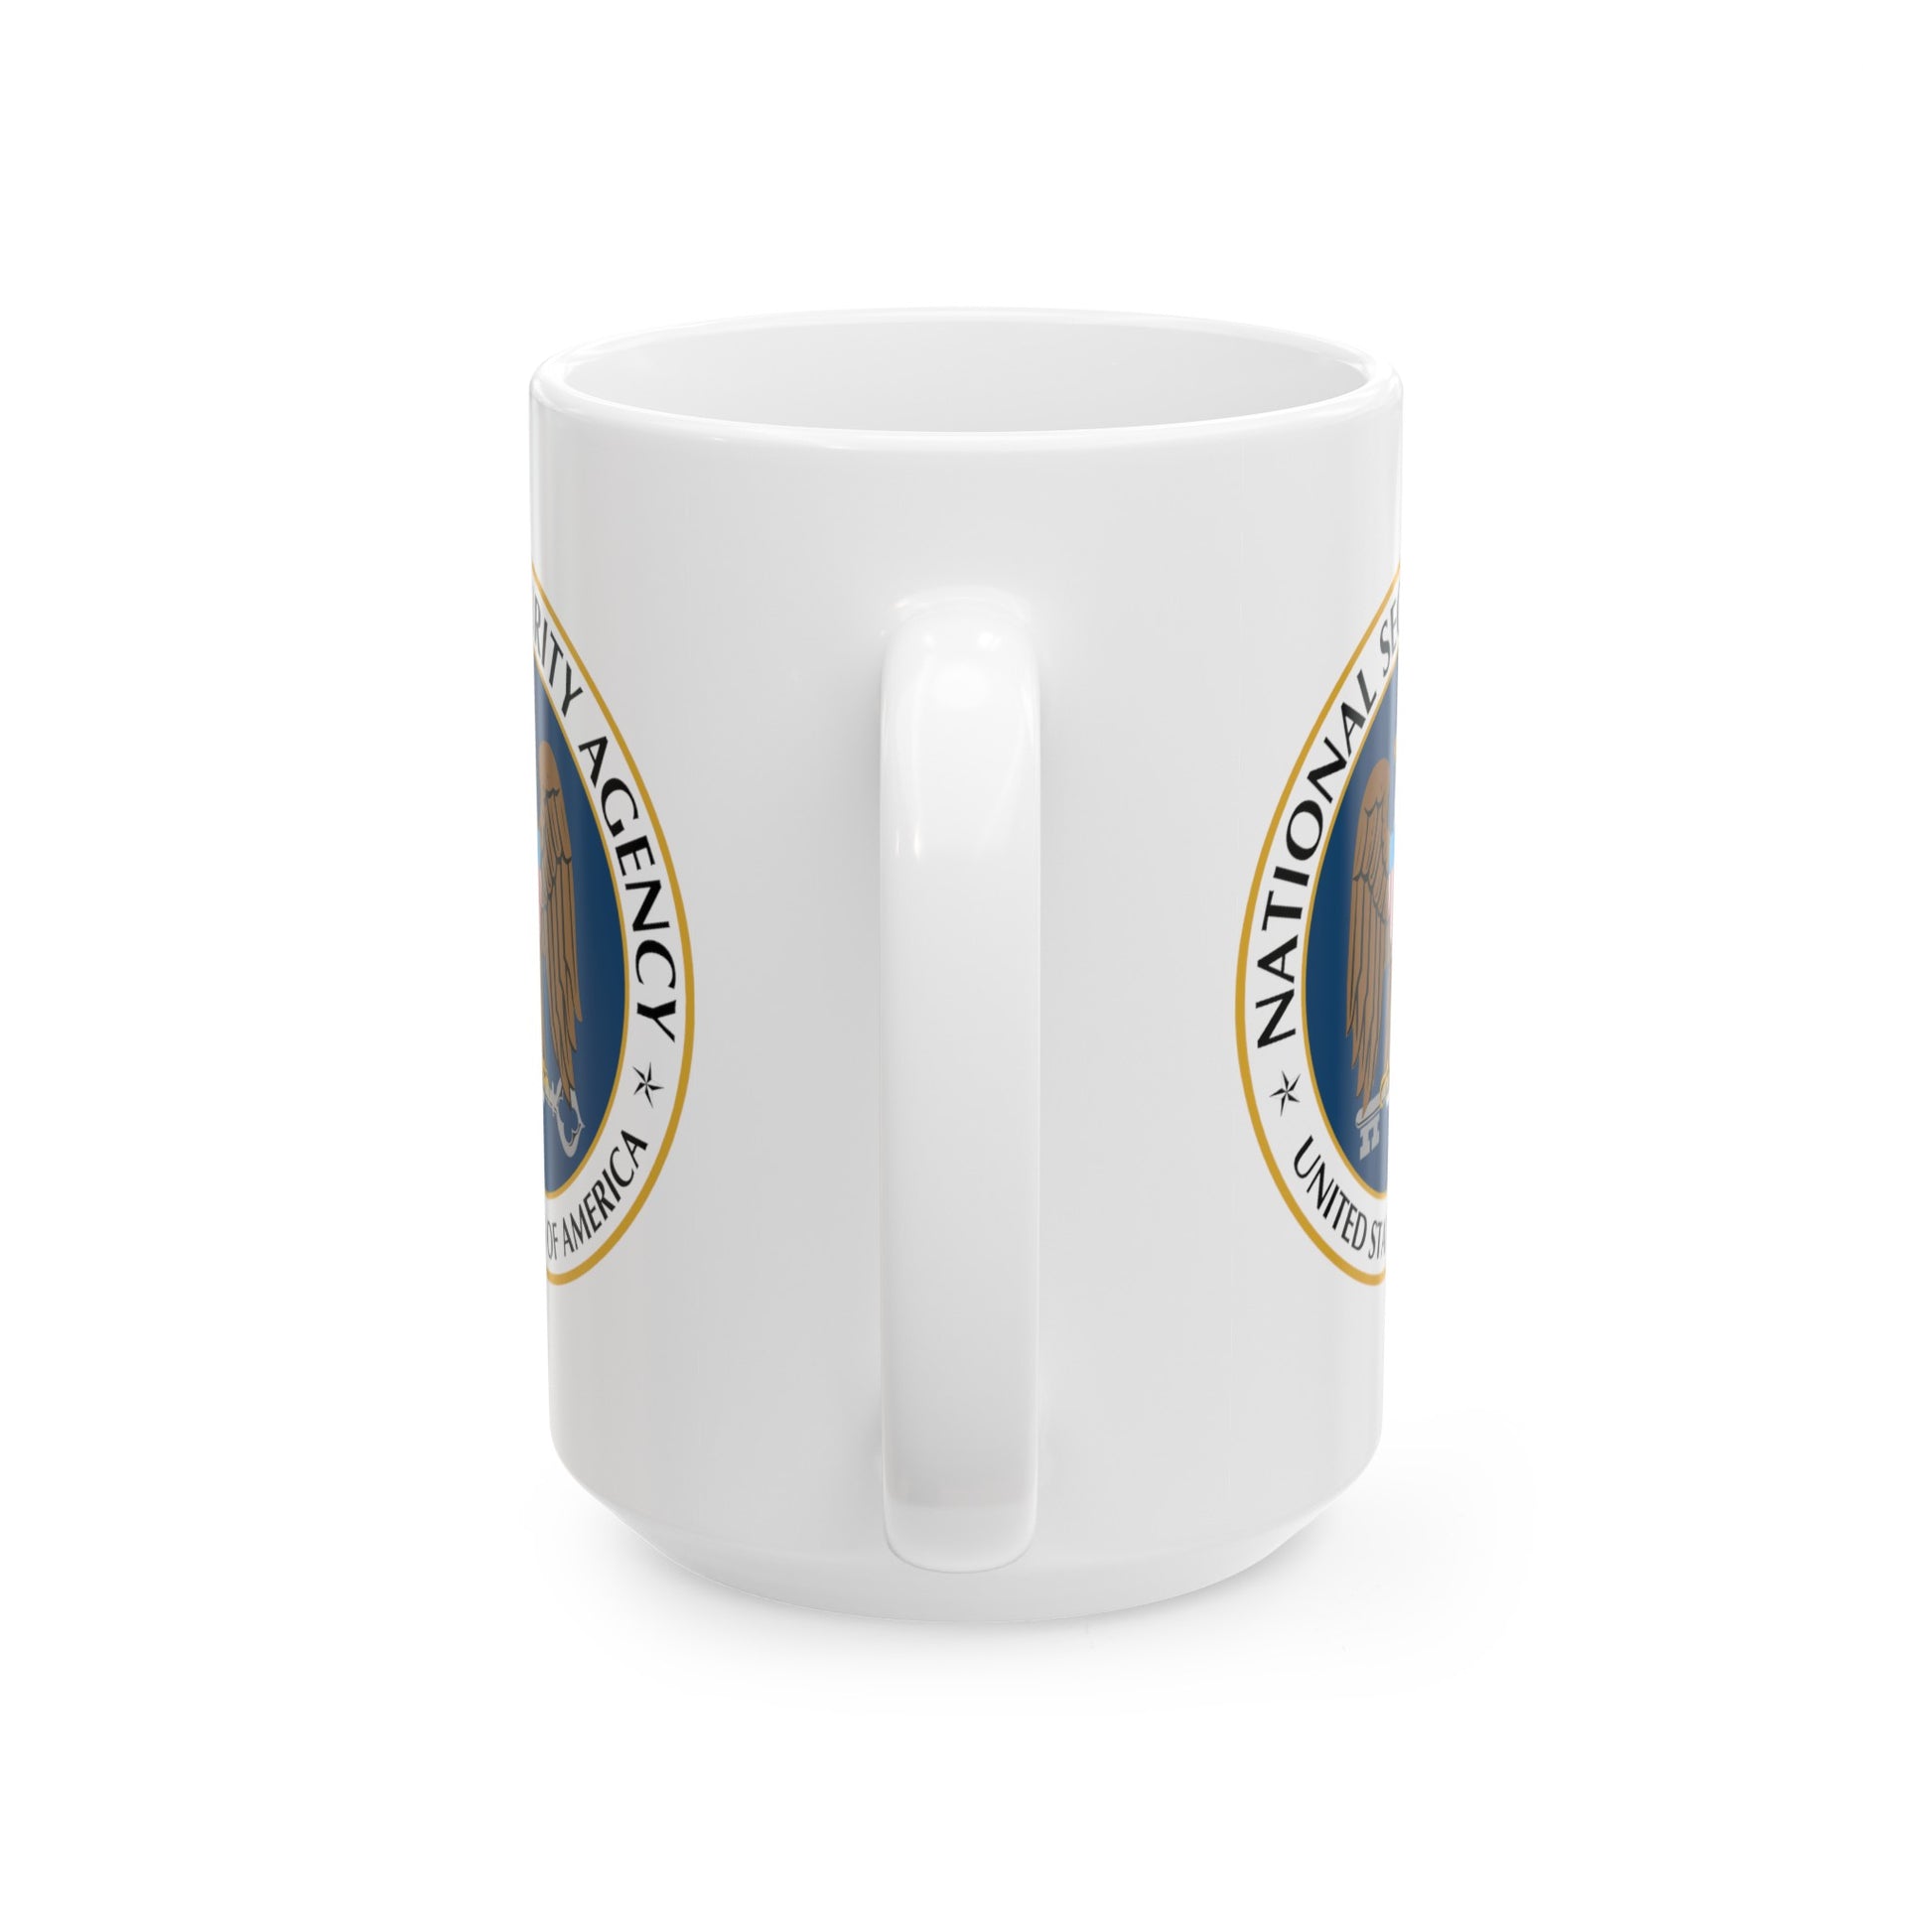 National Security Agency Coffee Mug - Double Sided White Ceramic 15oz by TheGlassyLass.com